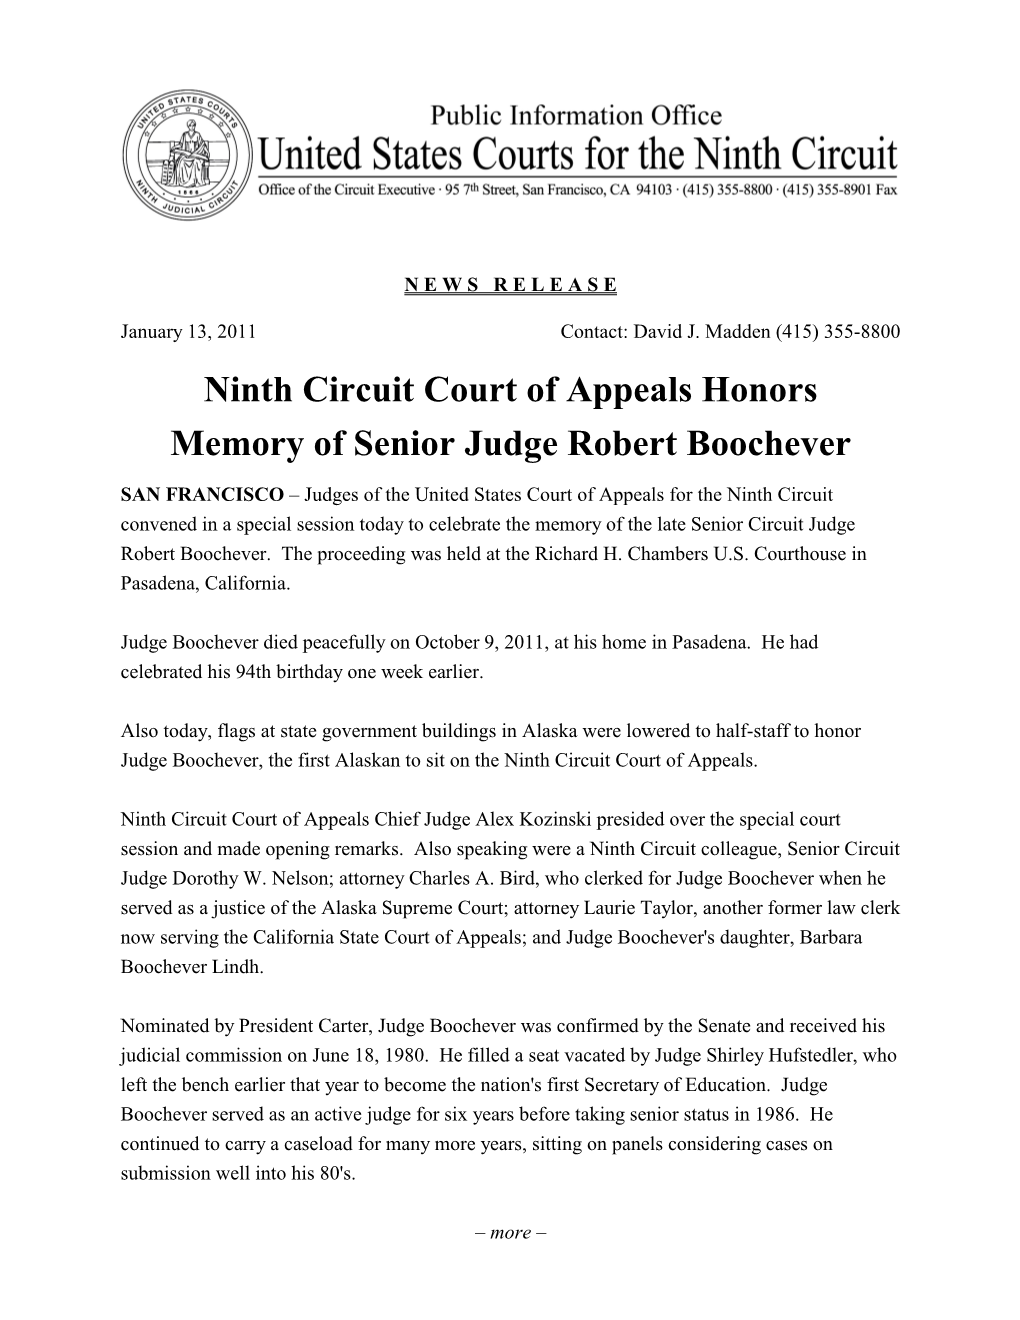 Ninth Circuit Court of Appeals Honors Memory of Senior Judge Robert Boochever